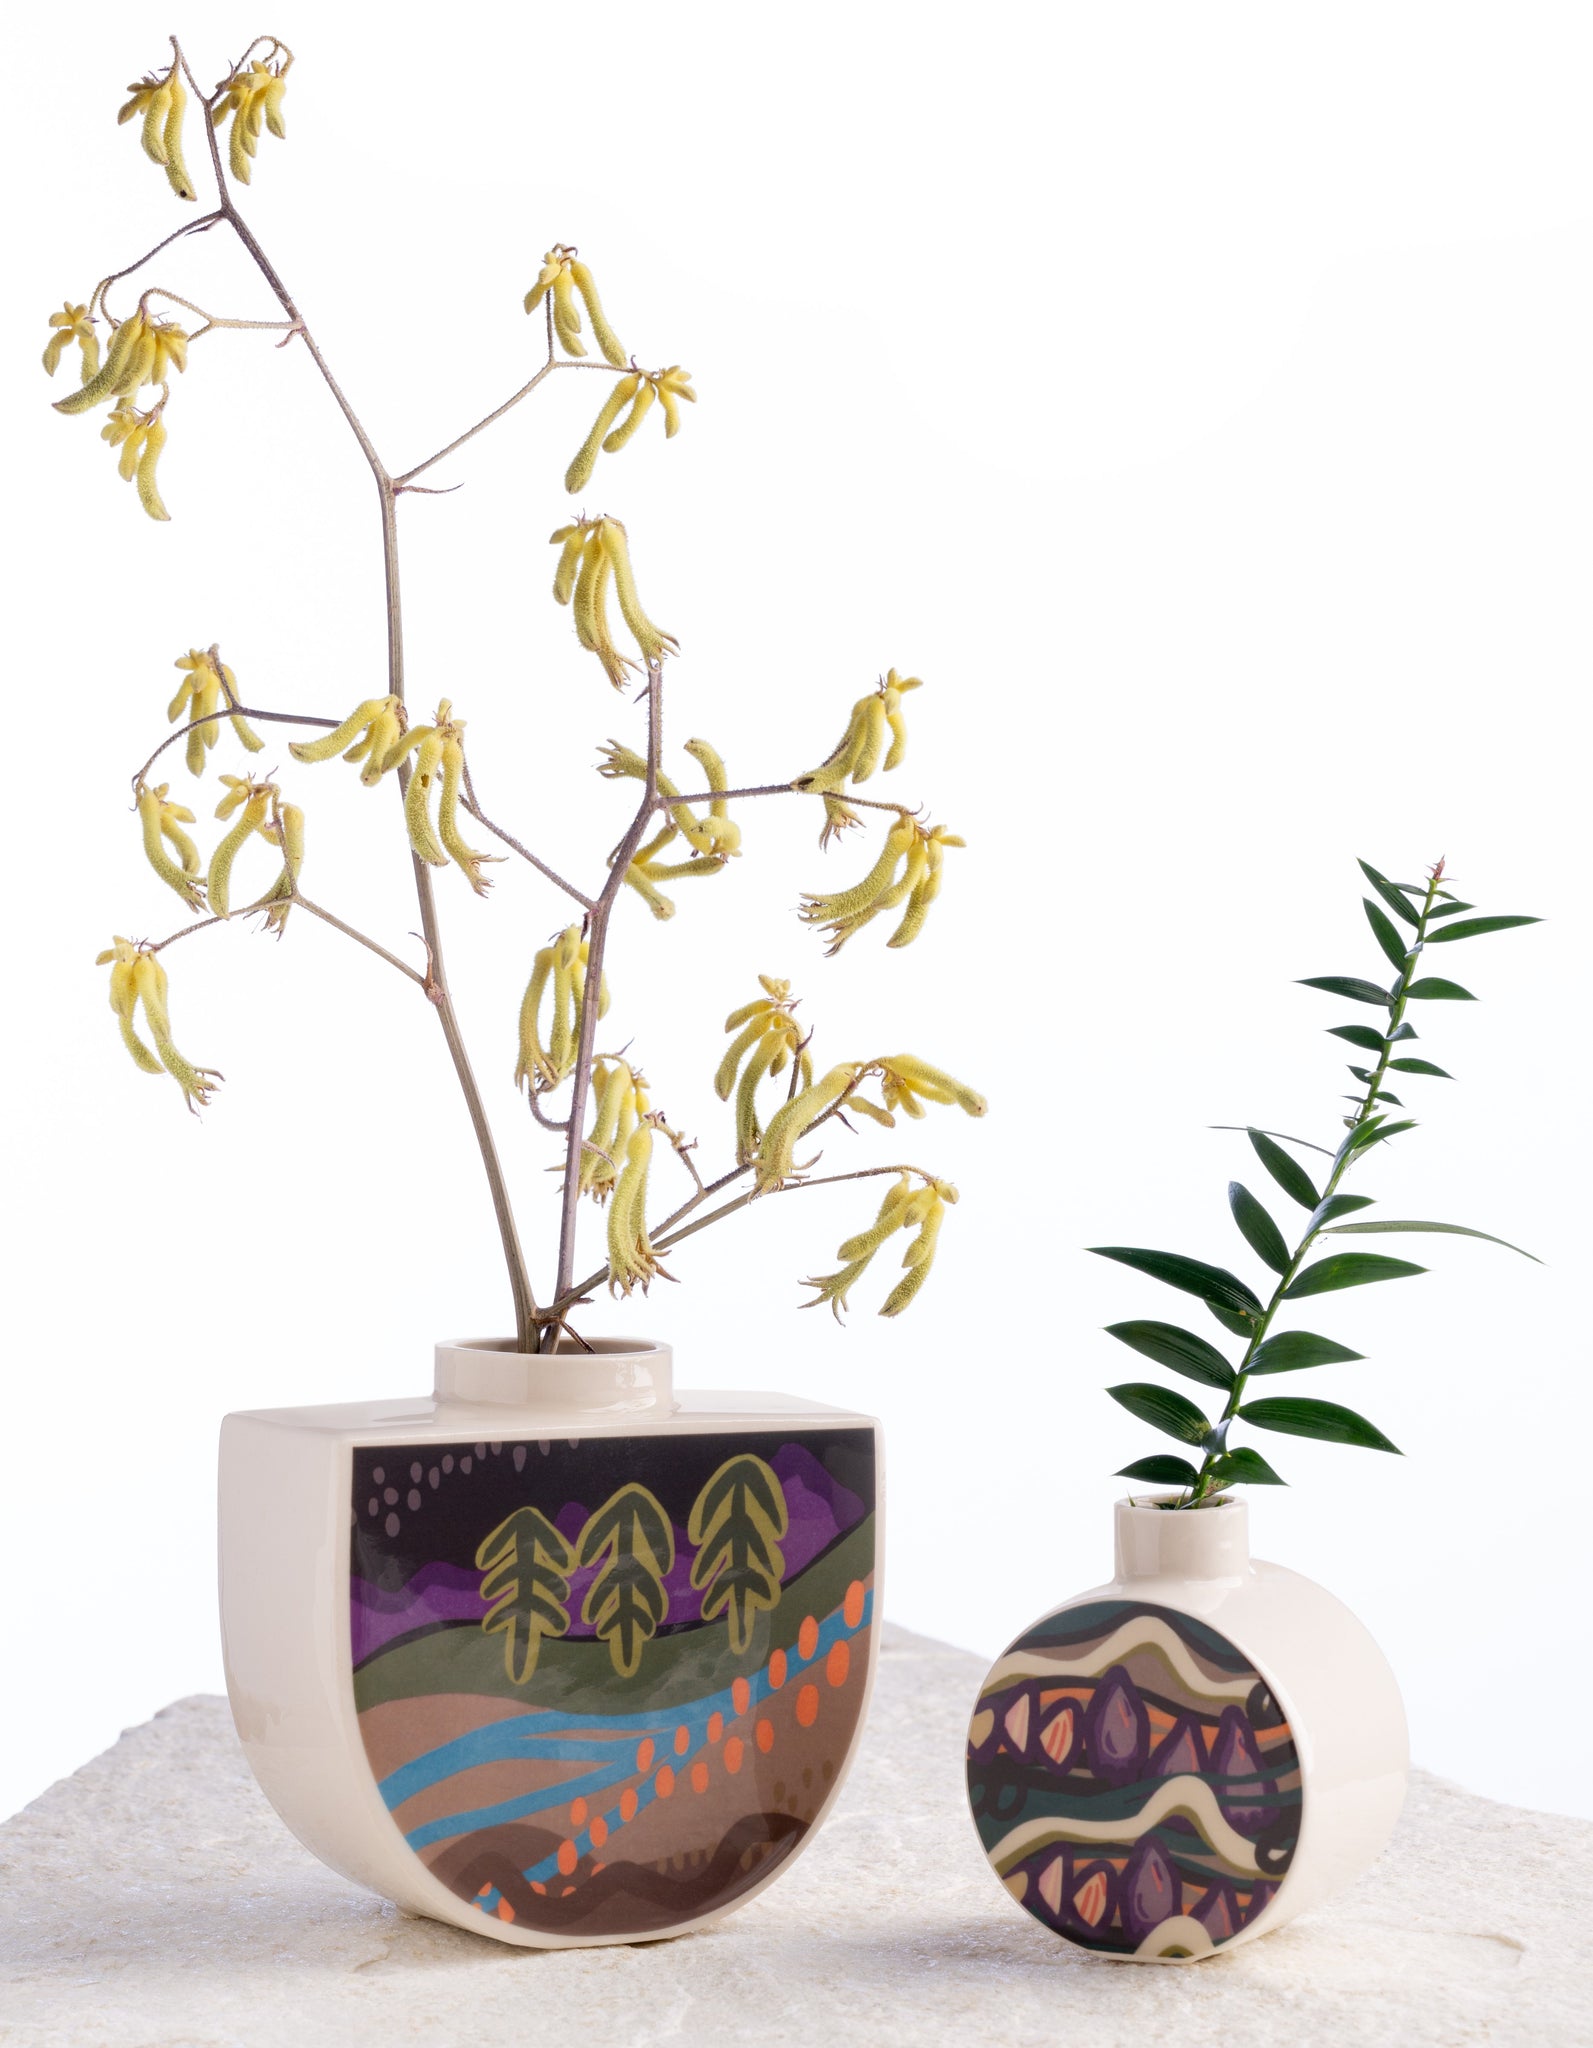 Yuguri (Shellfish) Vase - Libby Harward